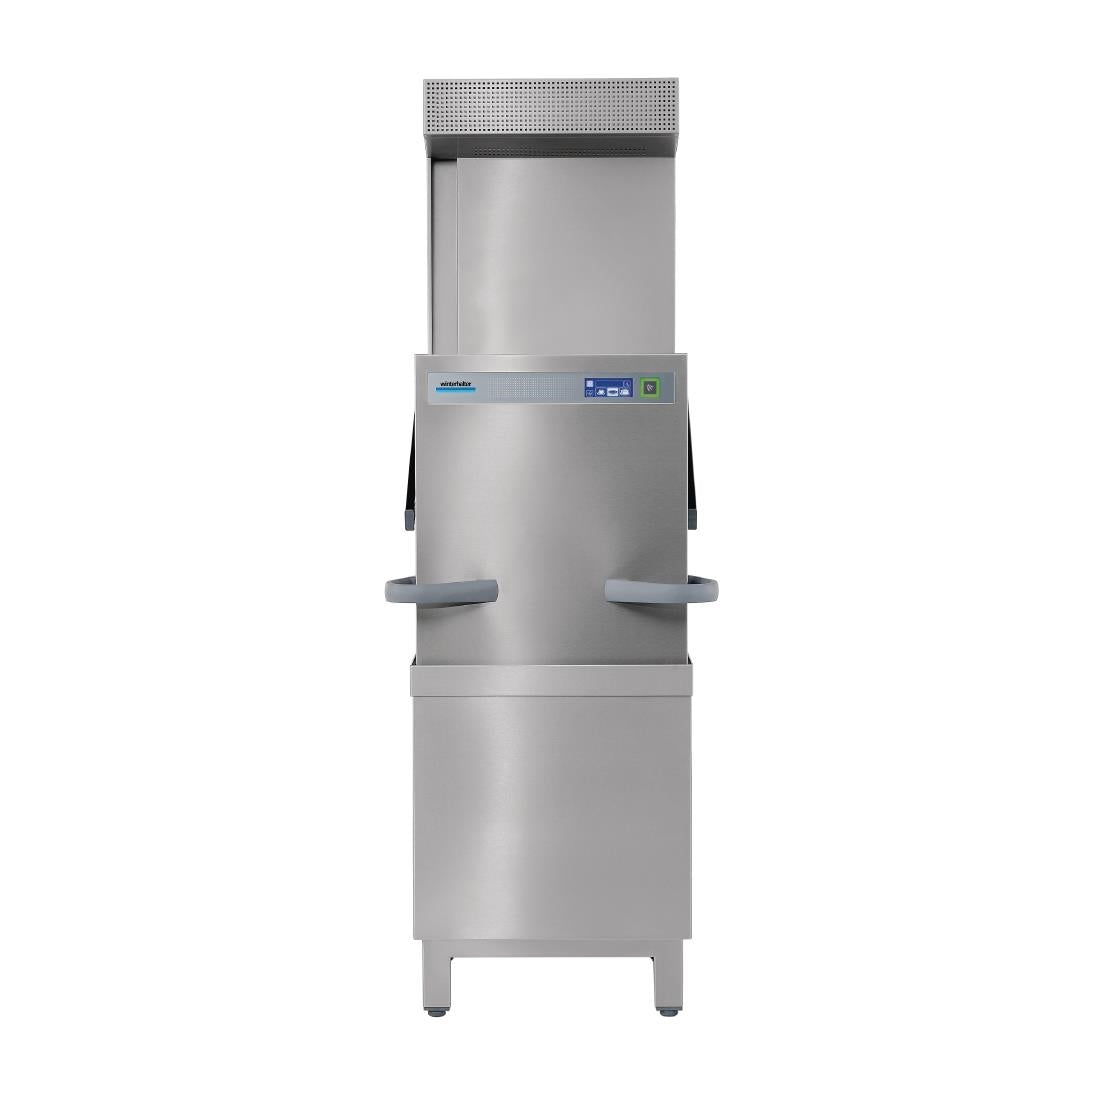 Winterhalter Pass Through Dishwasher PT-M-E-1 Energy